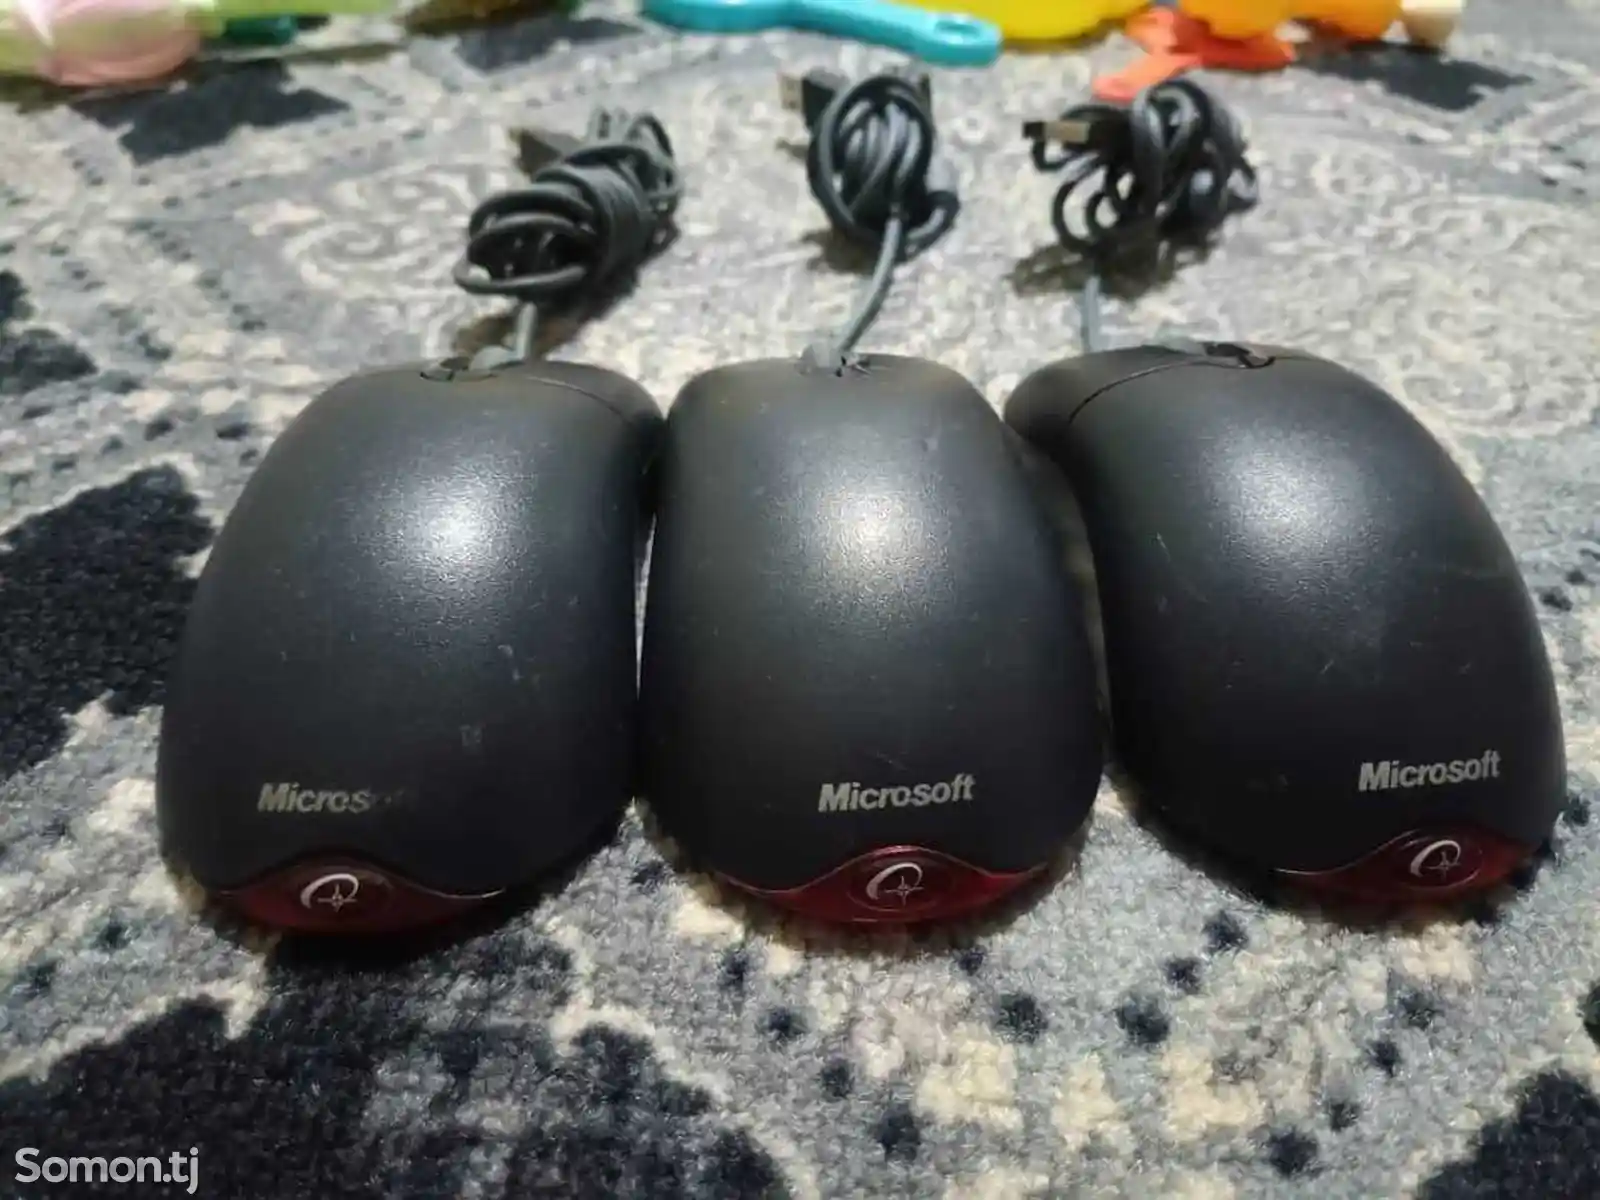 Мышка Microsoft-1